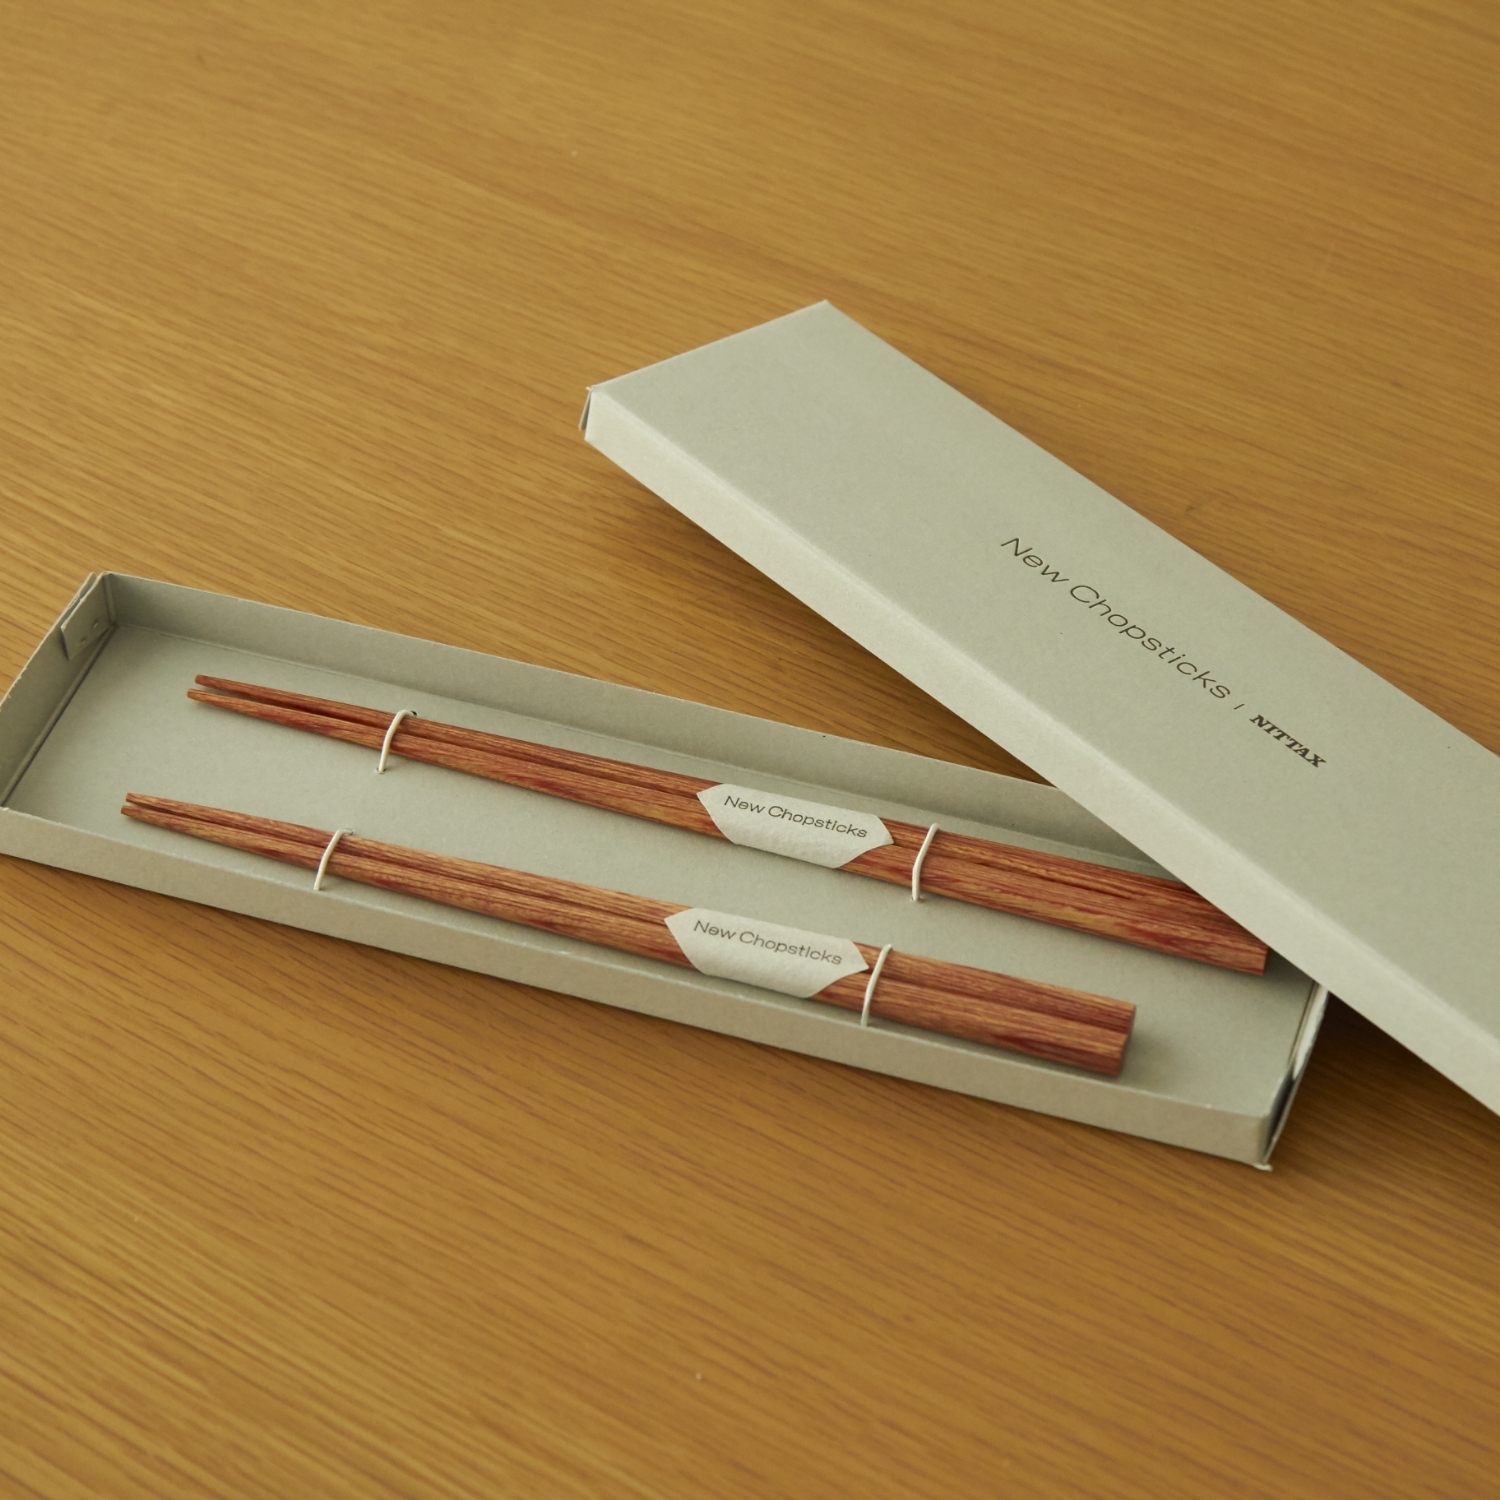 New Chopsticks 2膳用ギフトパッケージ